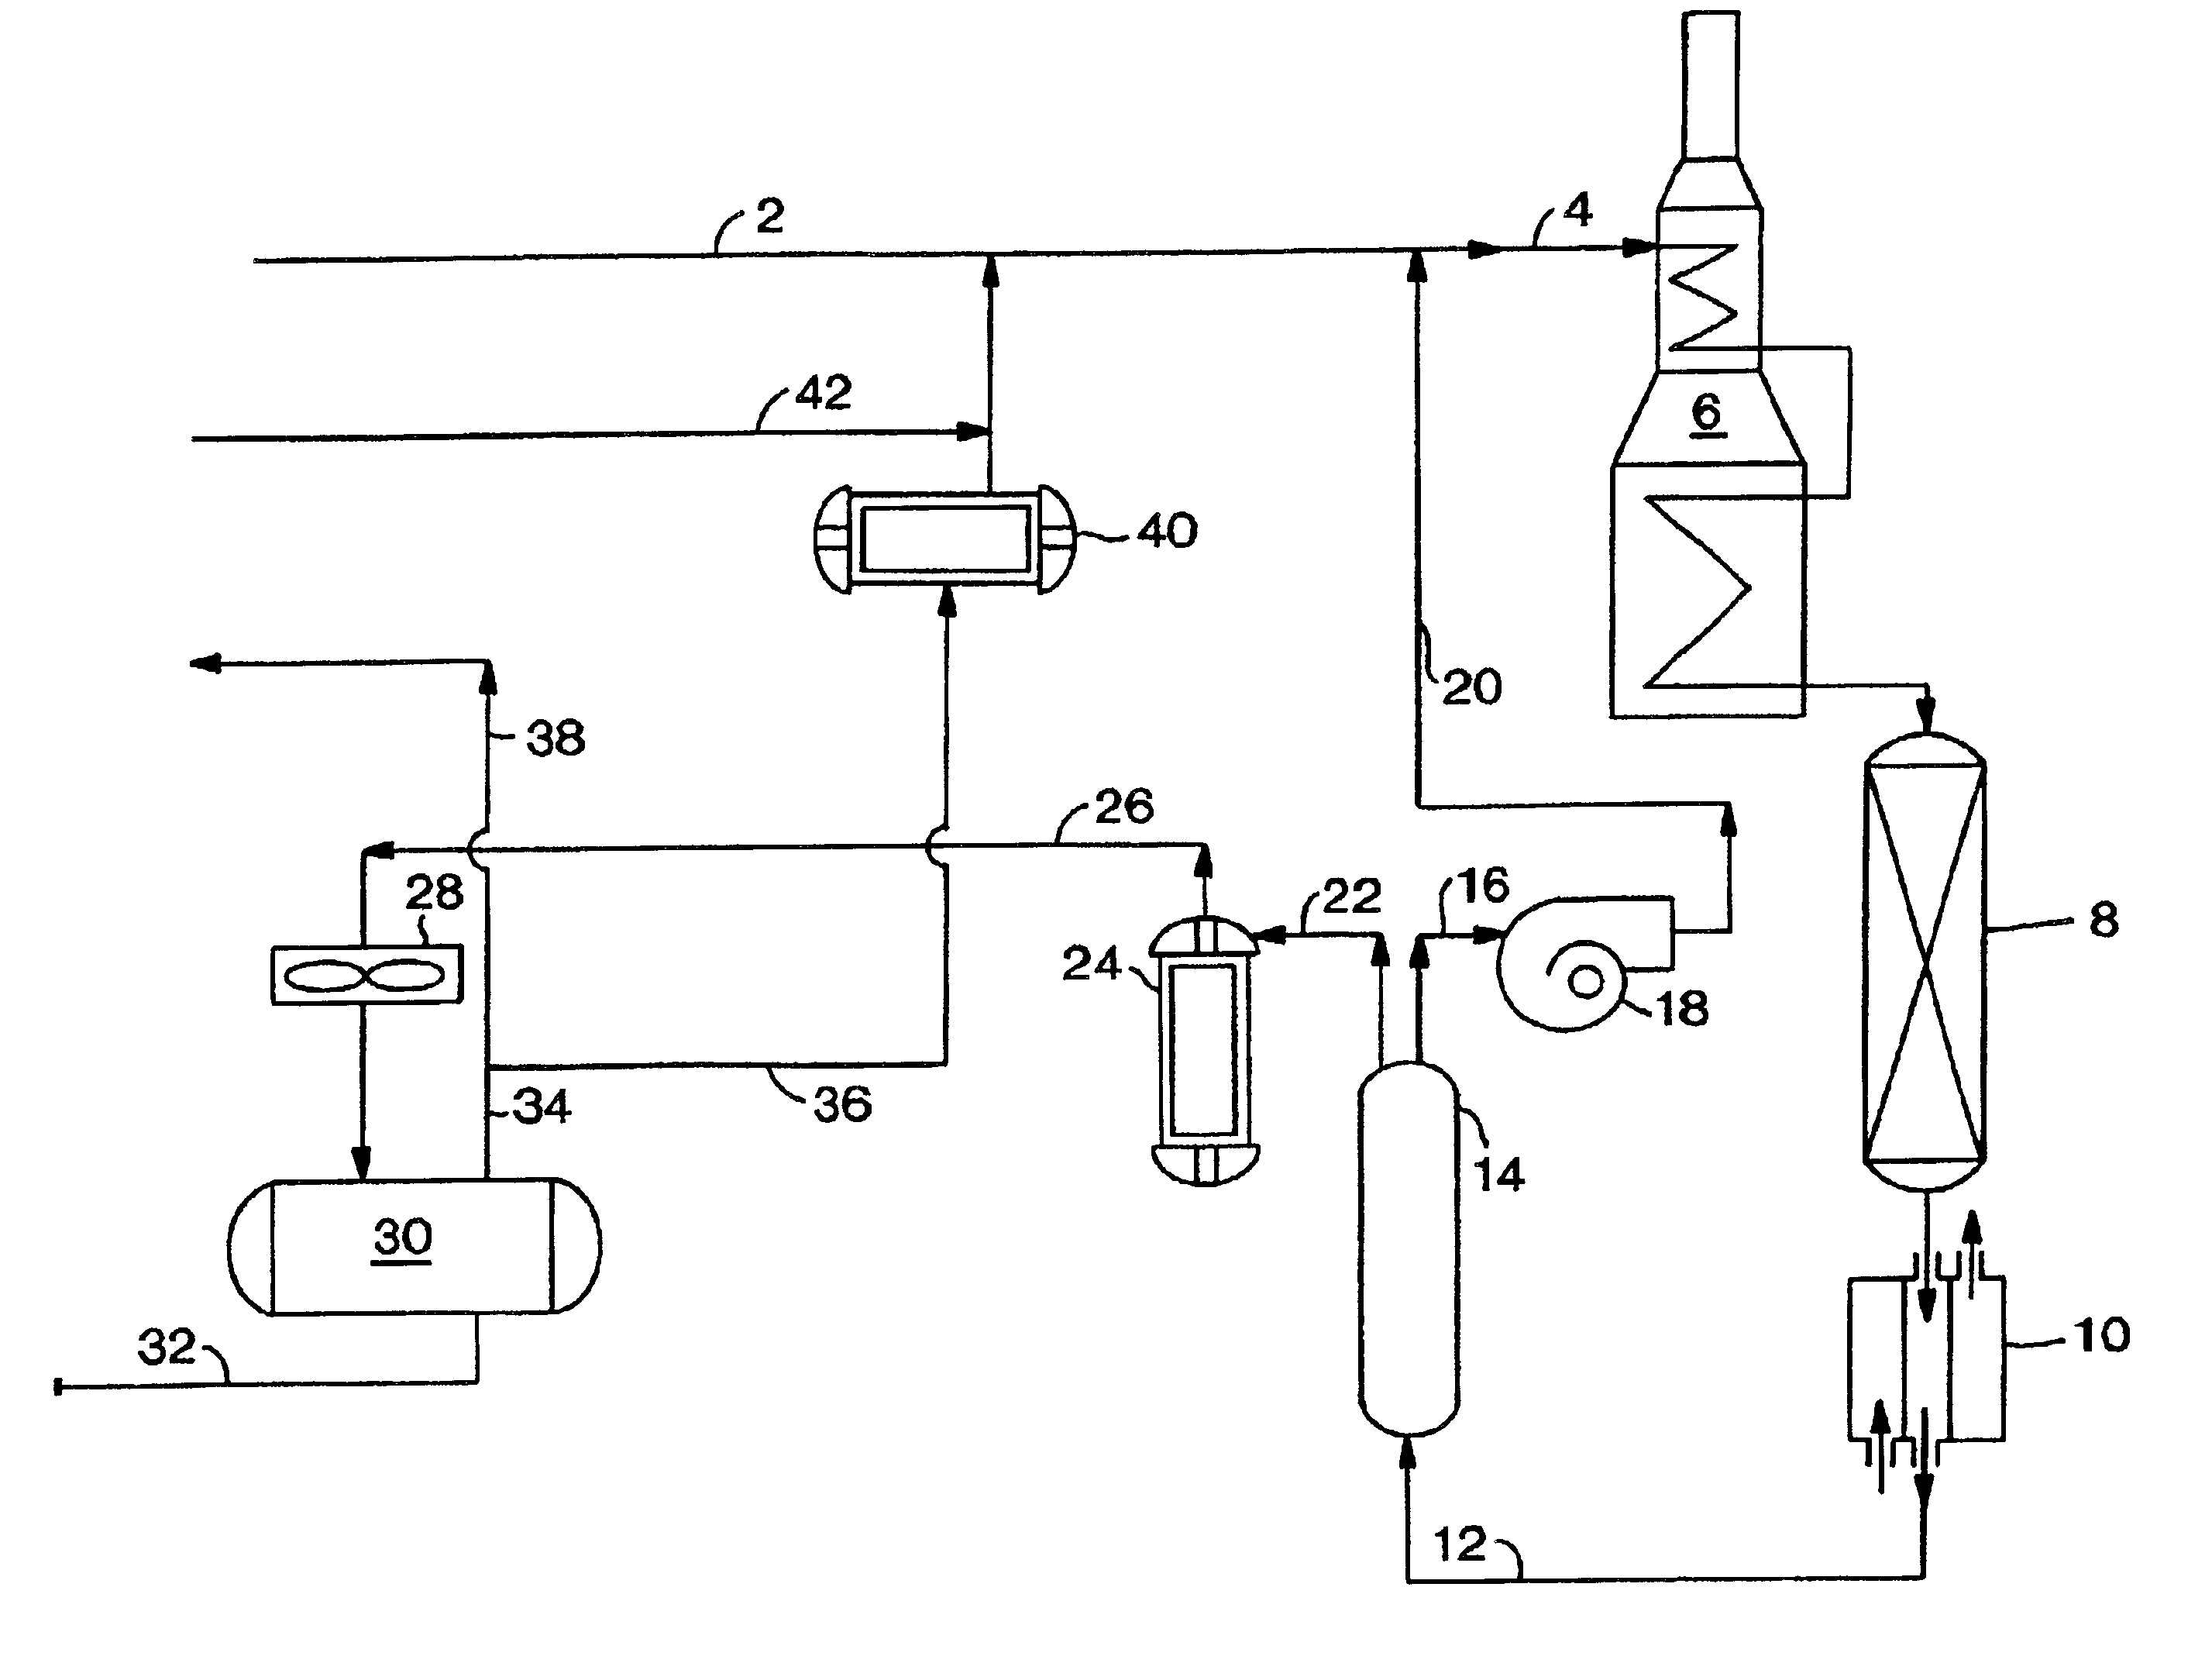 Process for producing para-xylene